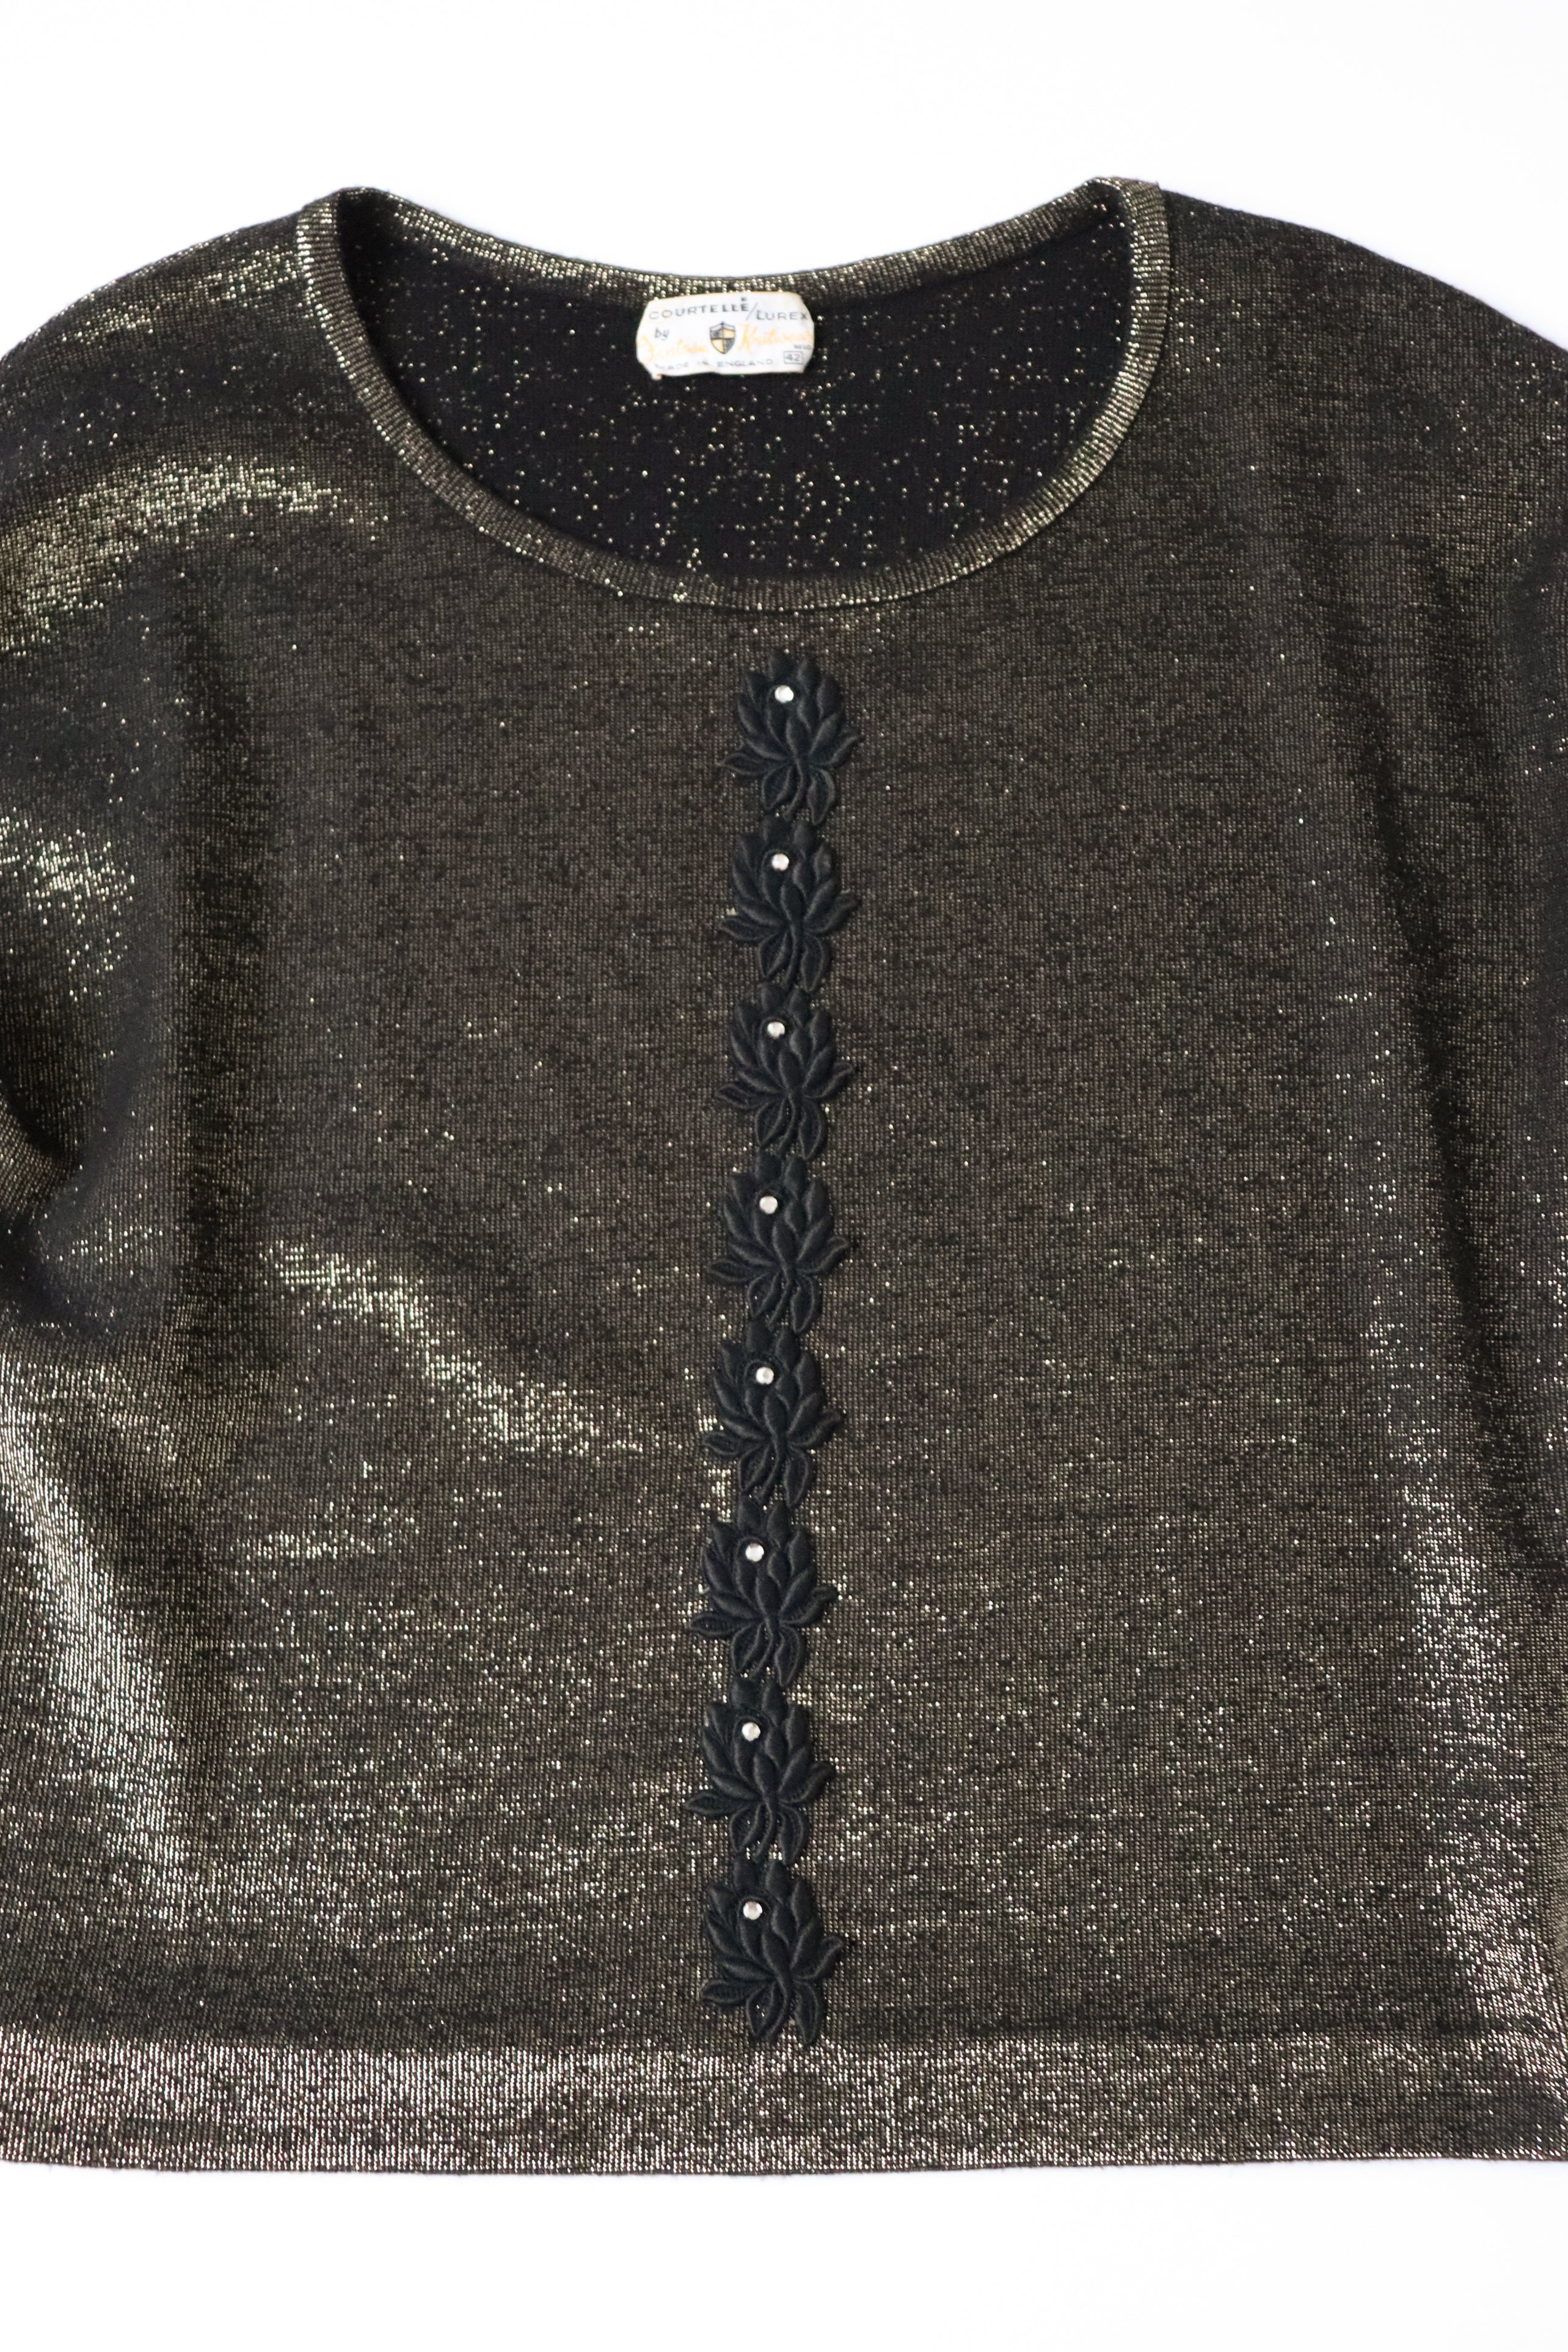 Vintage 1960s Lurex Top - Fantasia Knitwear  - Black / Gold - Fit M / UK 12